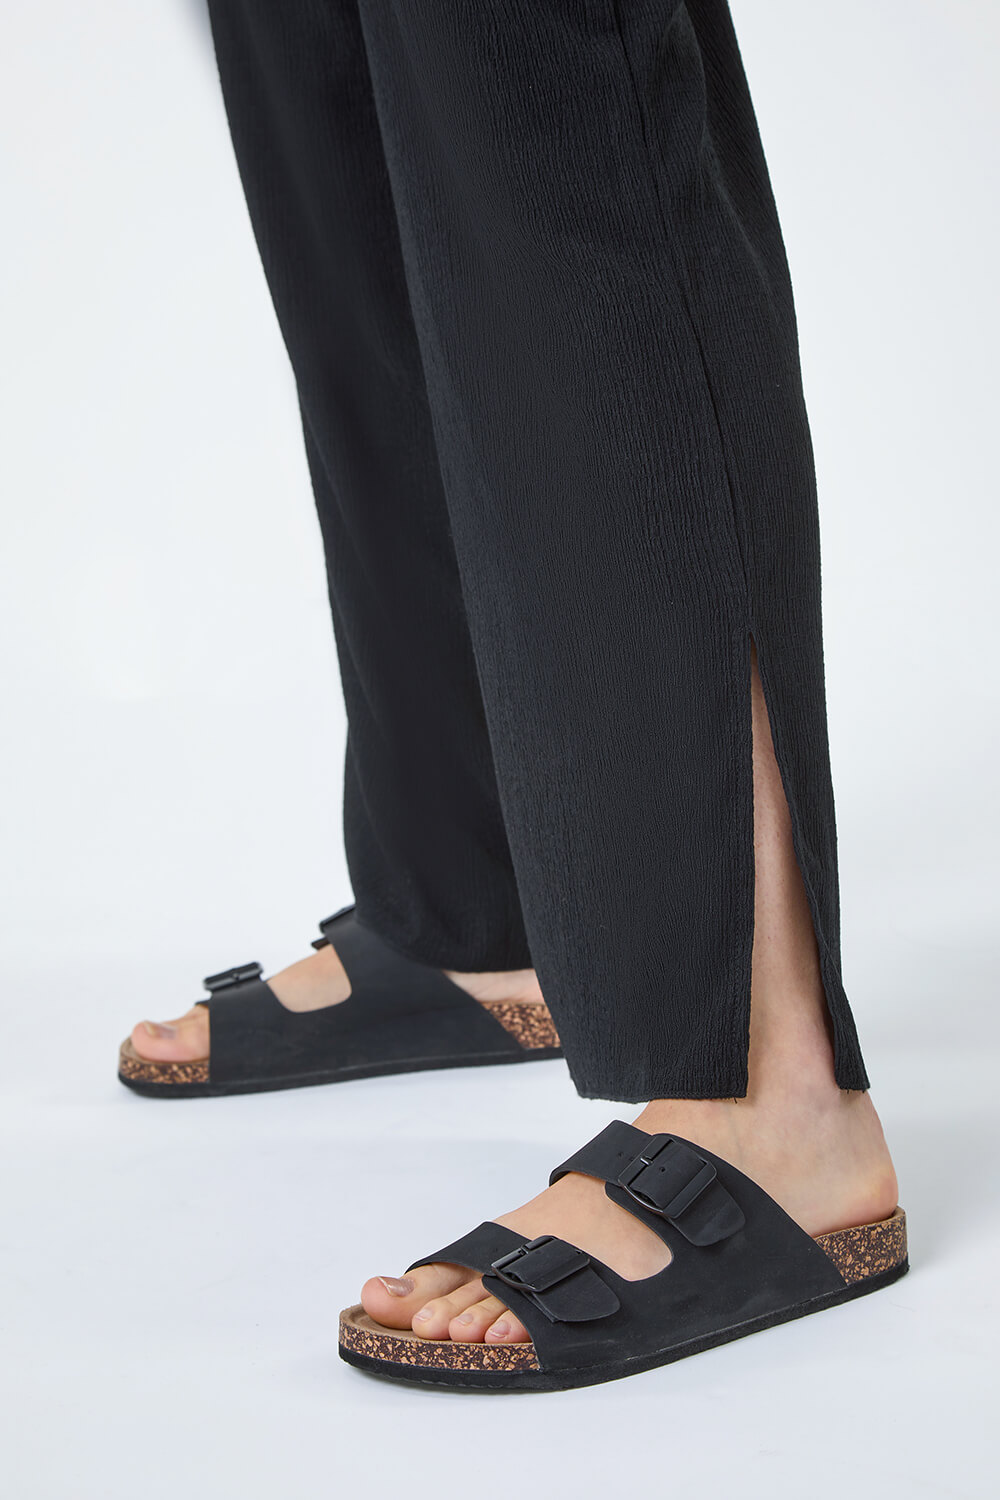 Black Crinkle Side Split Stretch Trousers, Image 5 of 5